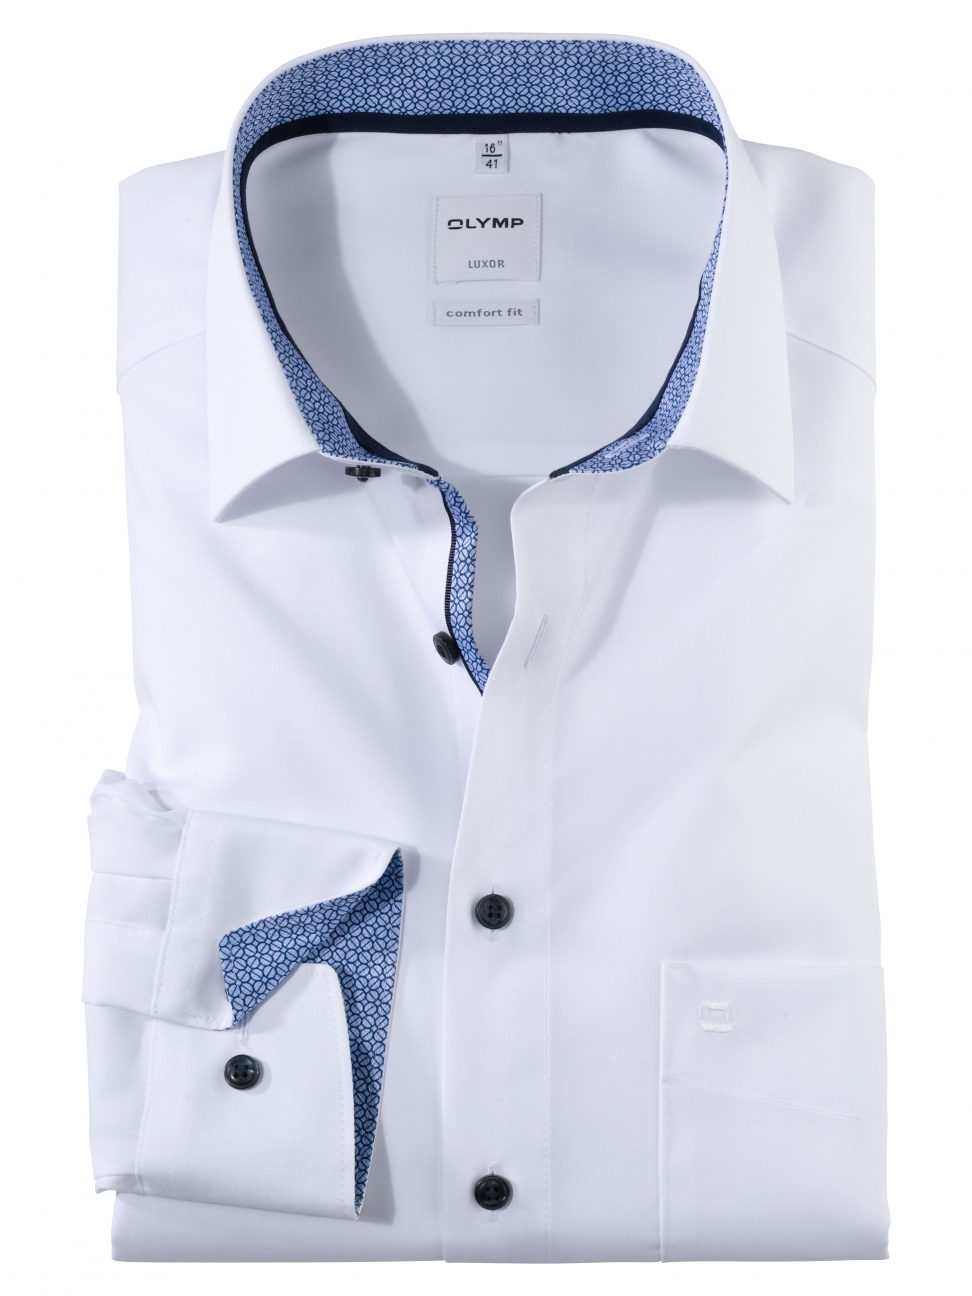 Koszula OLYMP Luxor comfort fit / biała / New Kent /07136400